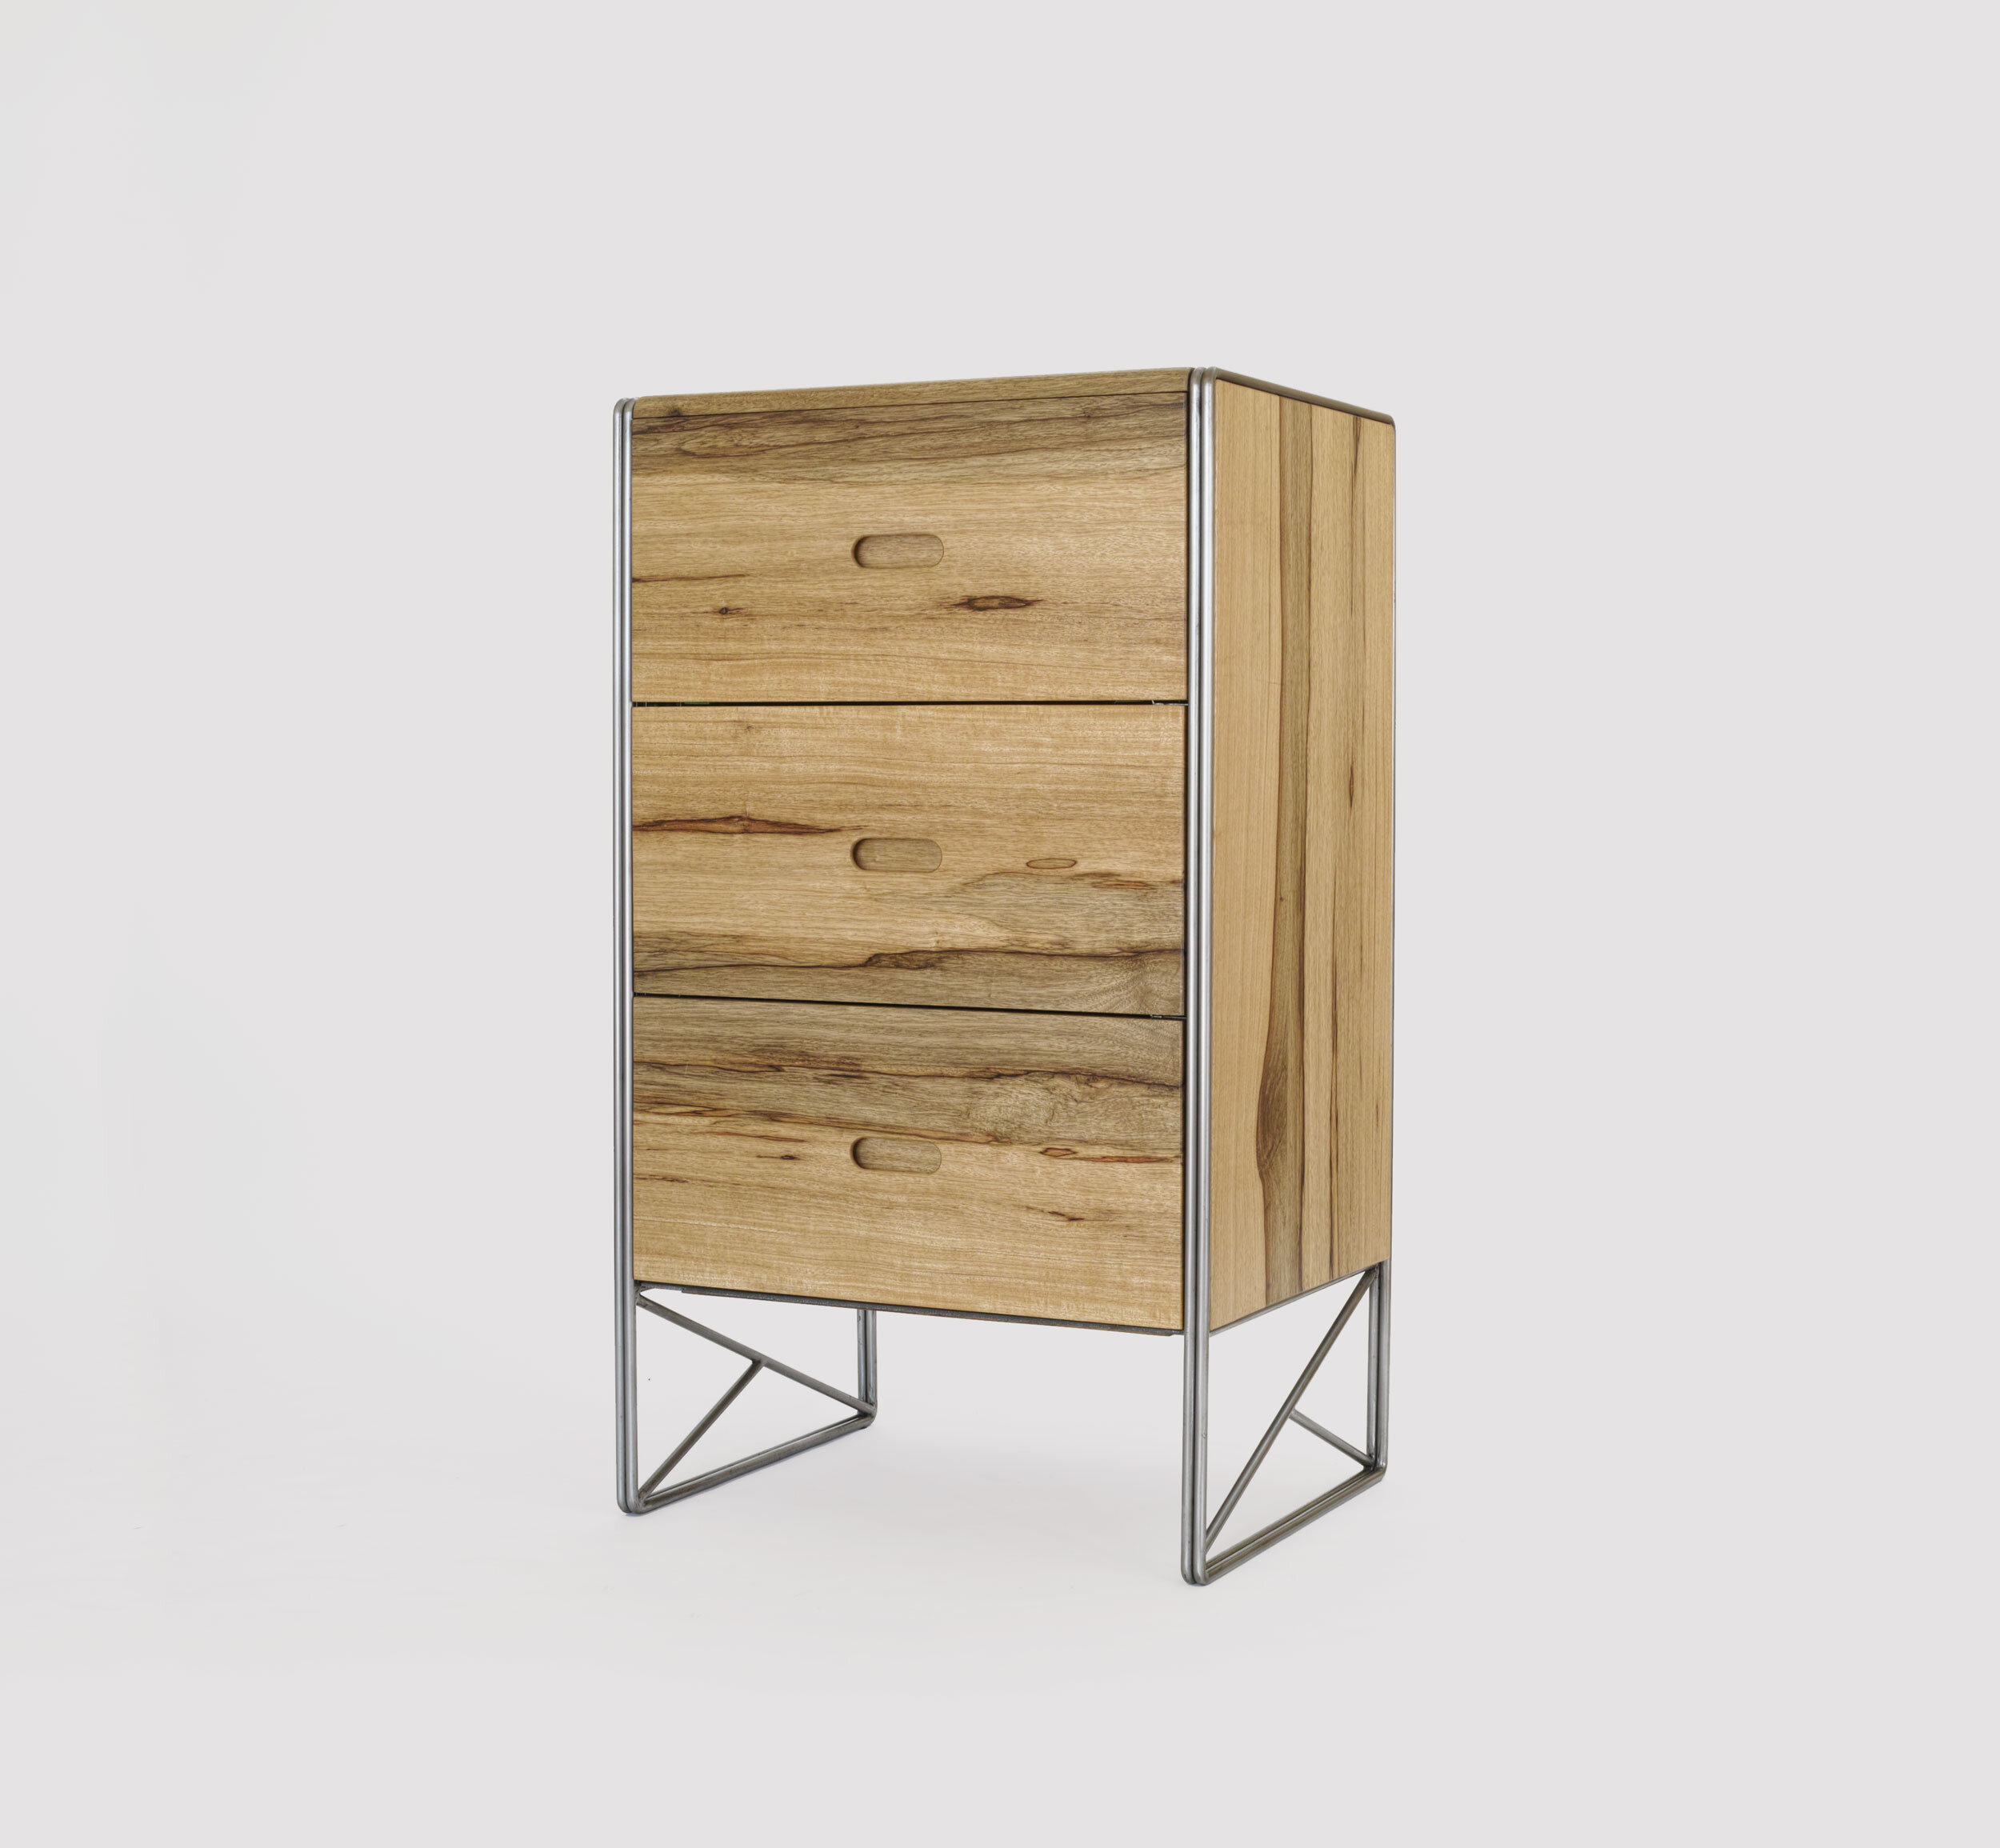 dorothy-storage-metal-and-wood-furniture-design-lebanon-beirut.jpg